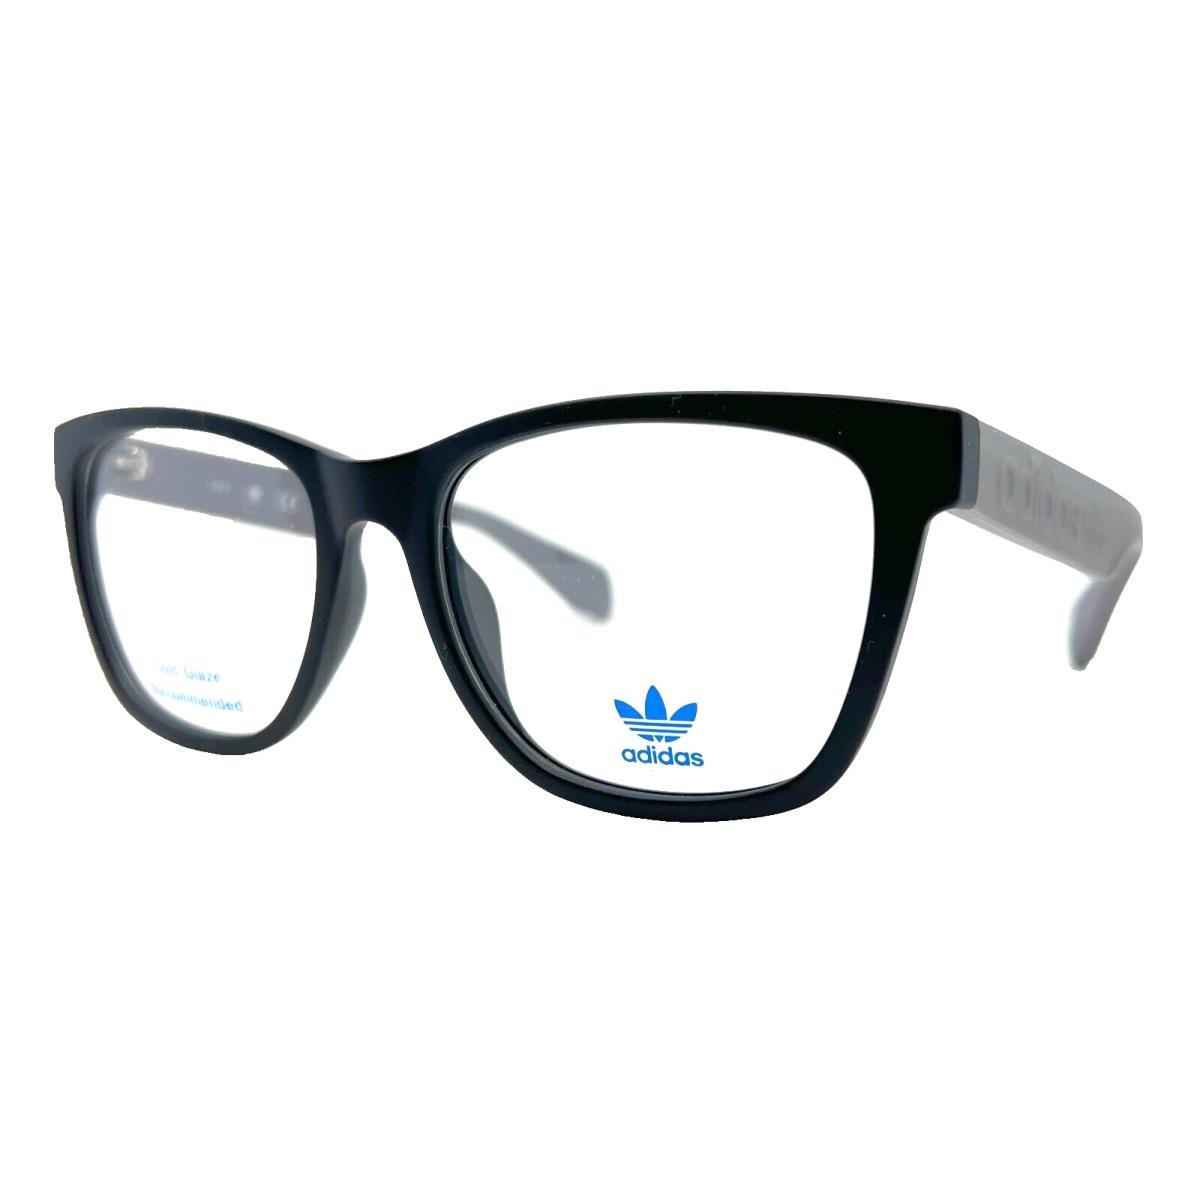 Adidas Originals - OR5016 002 54/17/145 - Black Eyeglasses Case